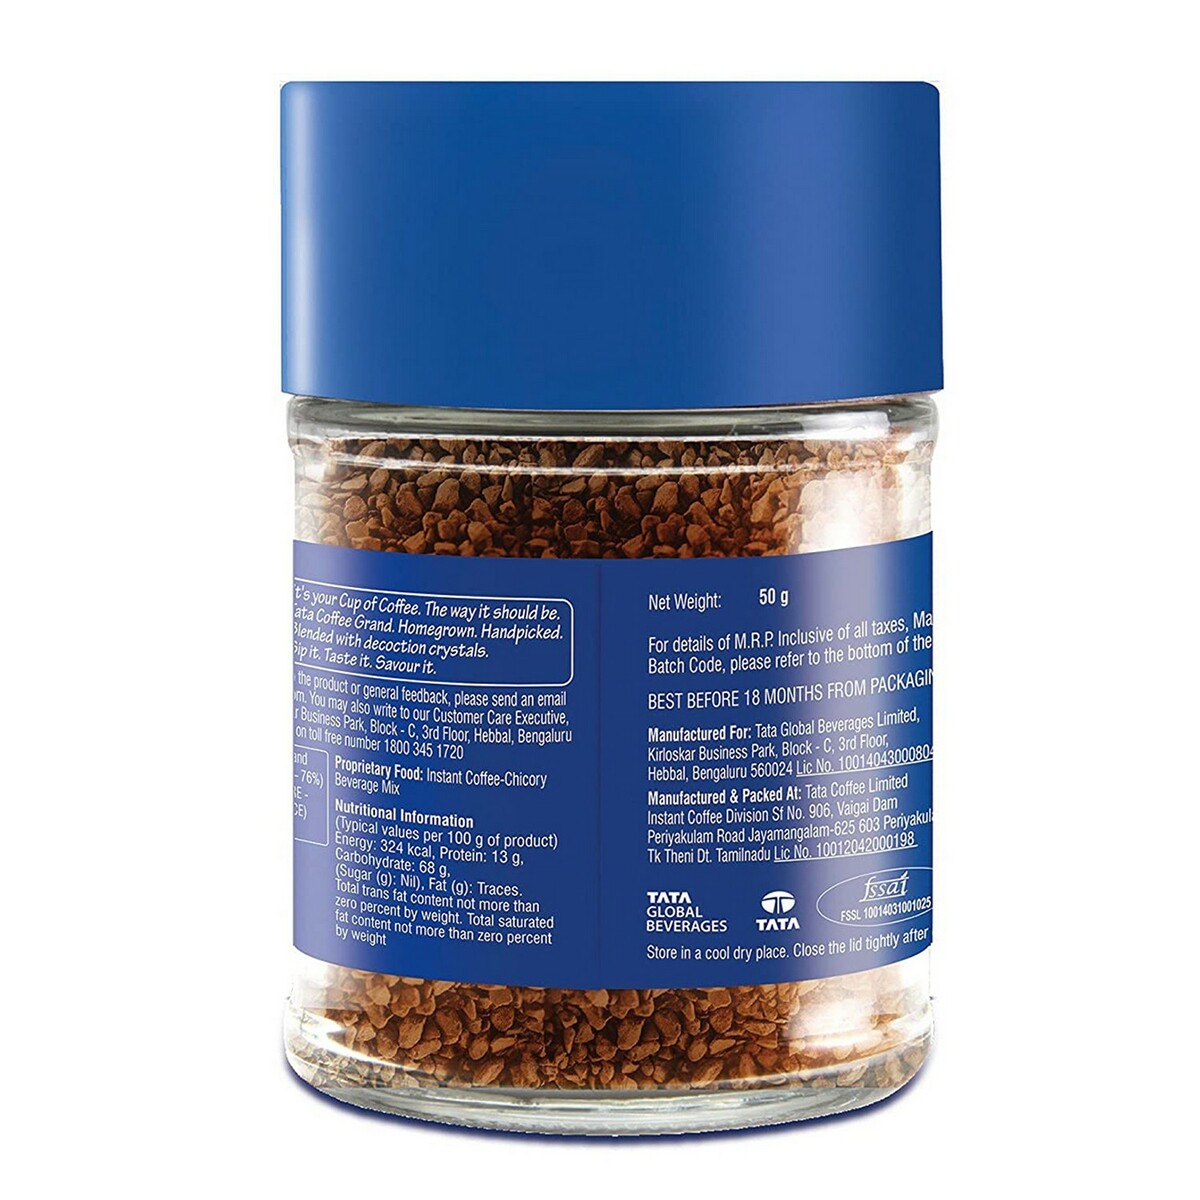 Tata Tetley Coffee Grand Instant 50g Jar